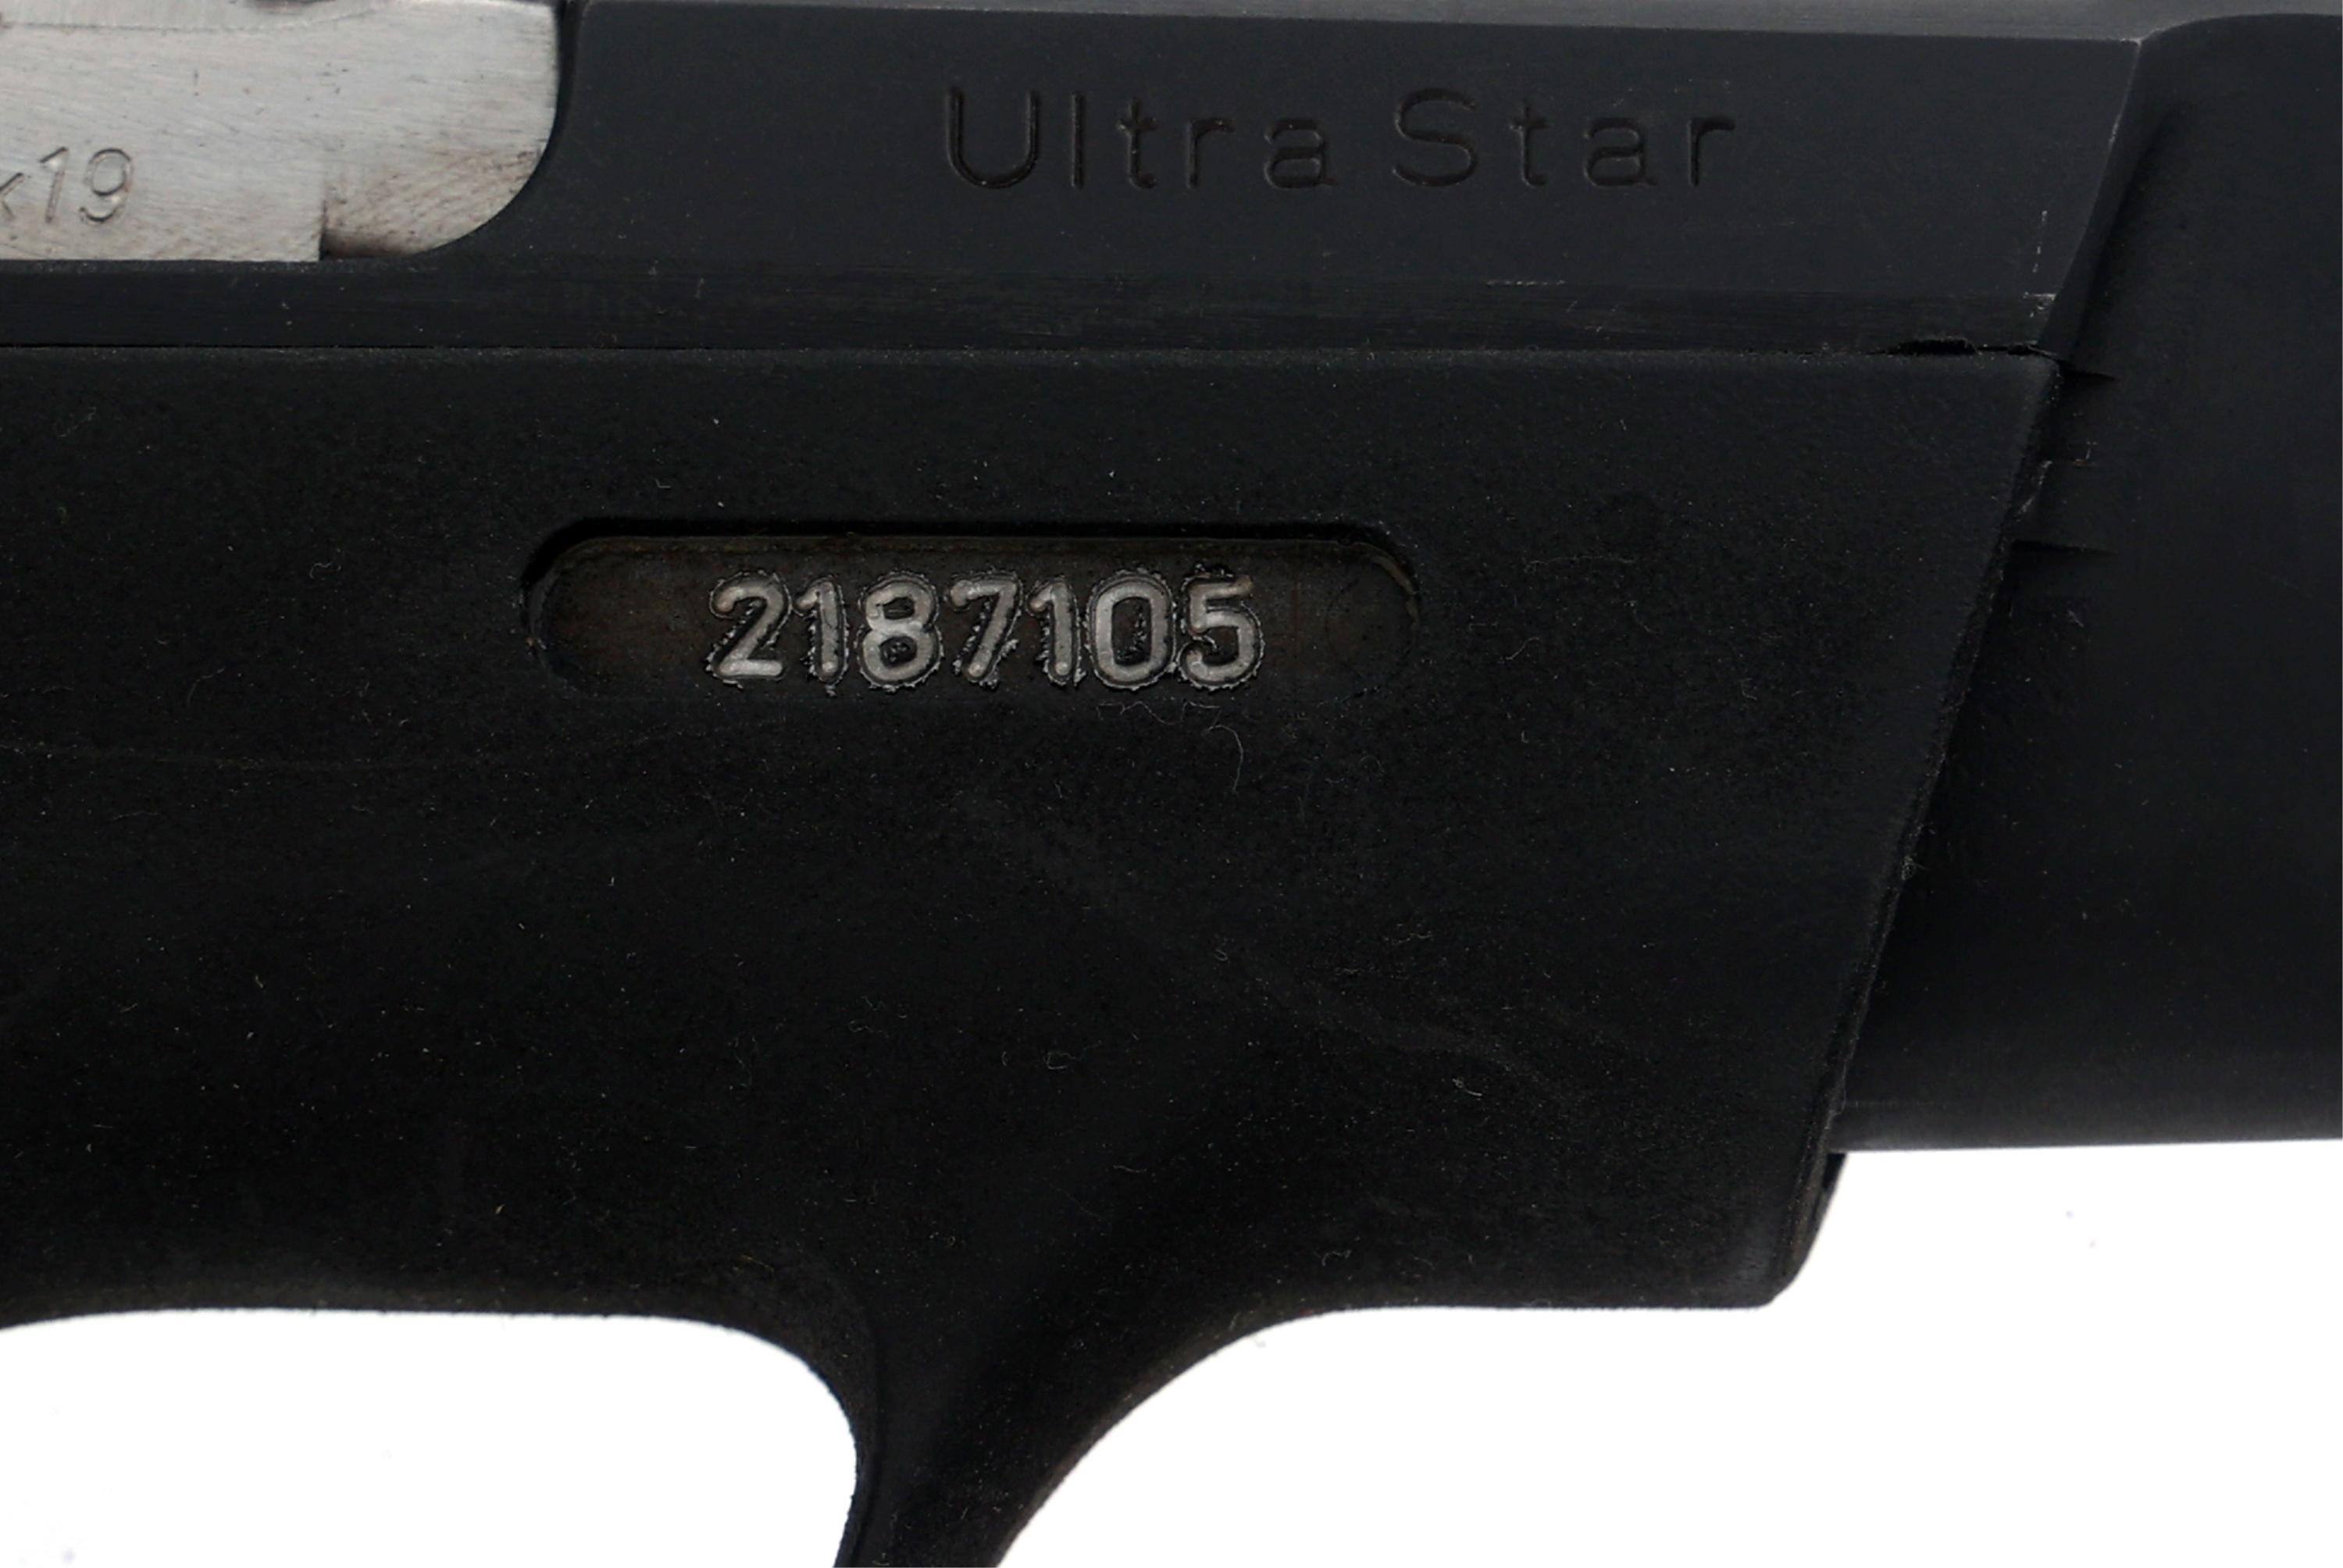 STAR MODEL ULTRA STAR 9x19mm CALIBER PISTOL